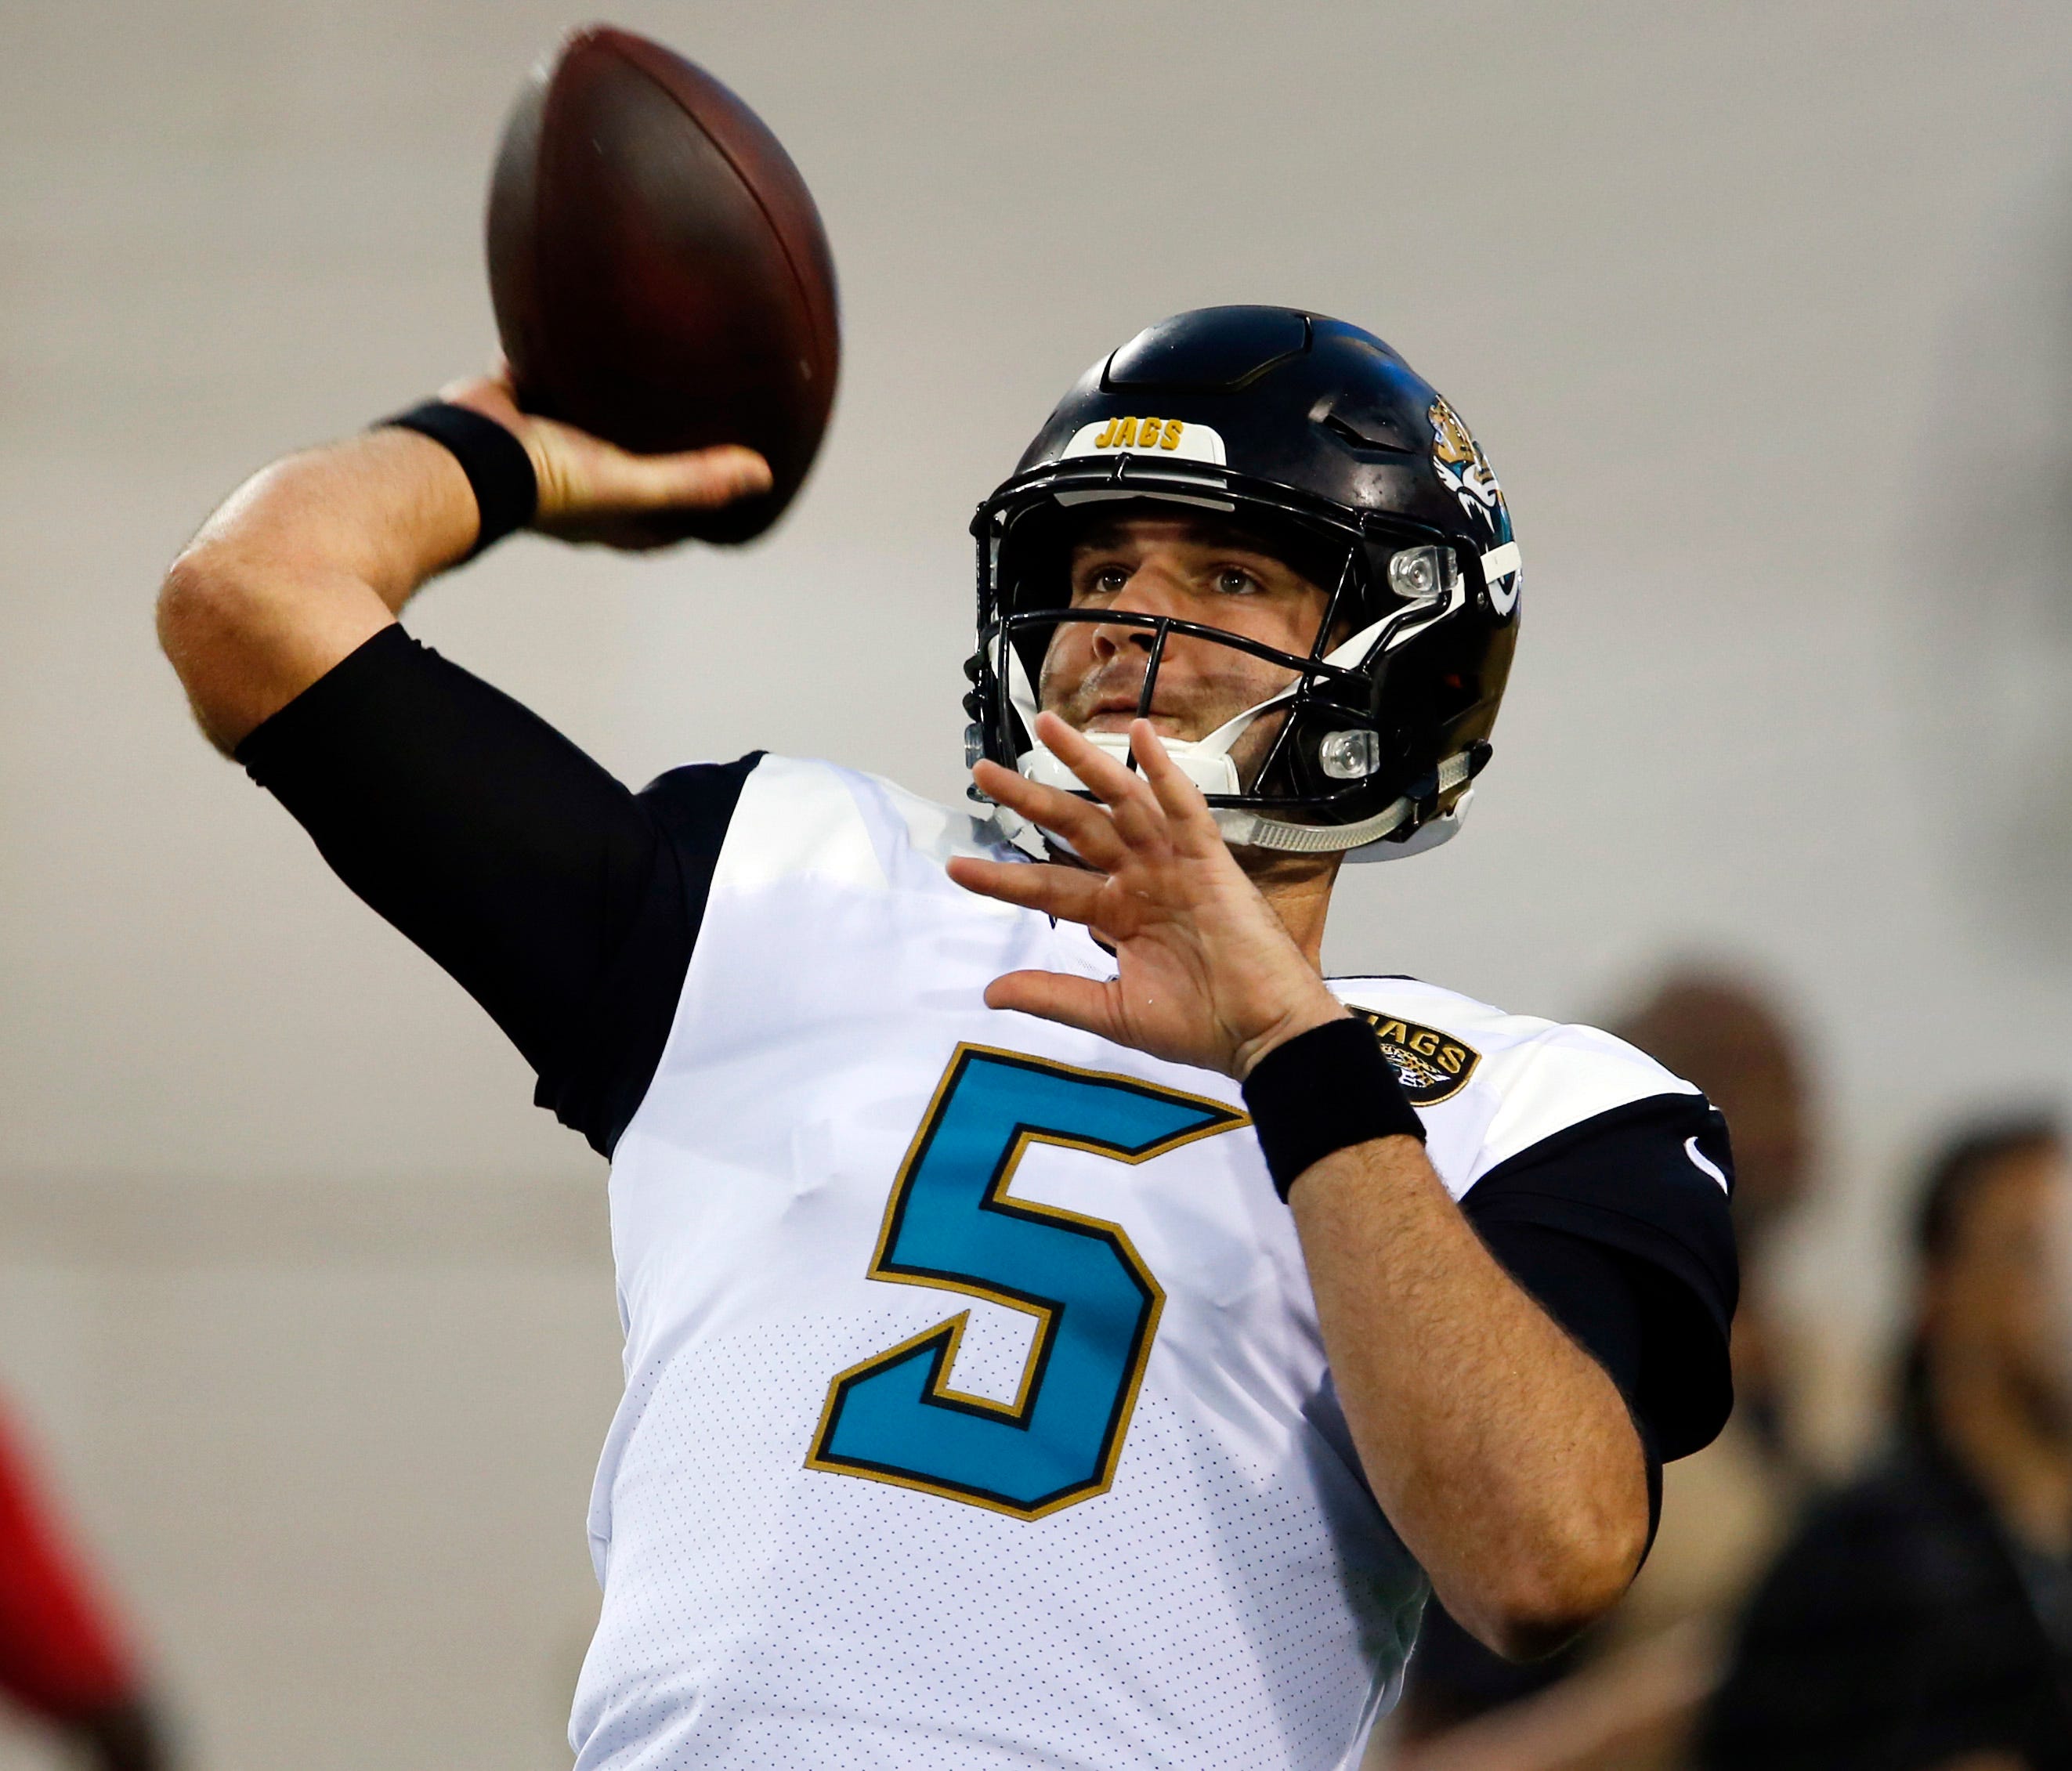 Jacksonville Jaguars quarterback Blake Bortles threw for 23 touchdowns and 17 interceptions last season.